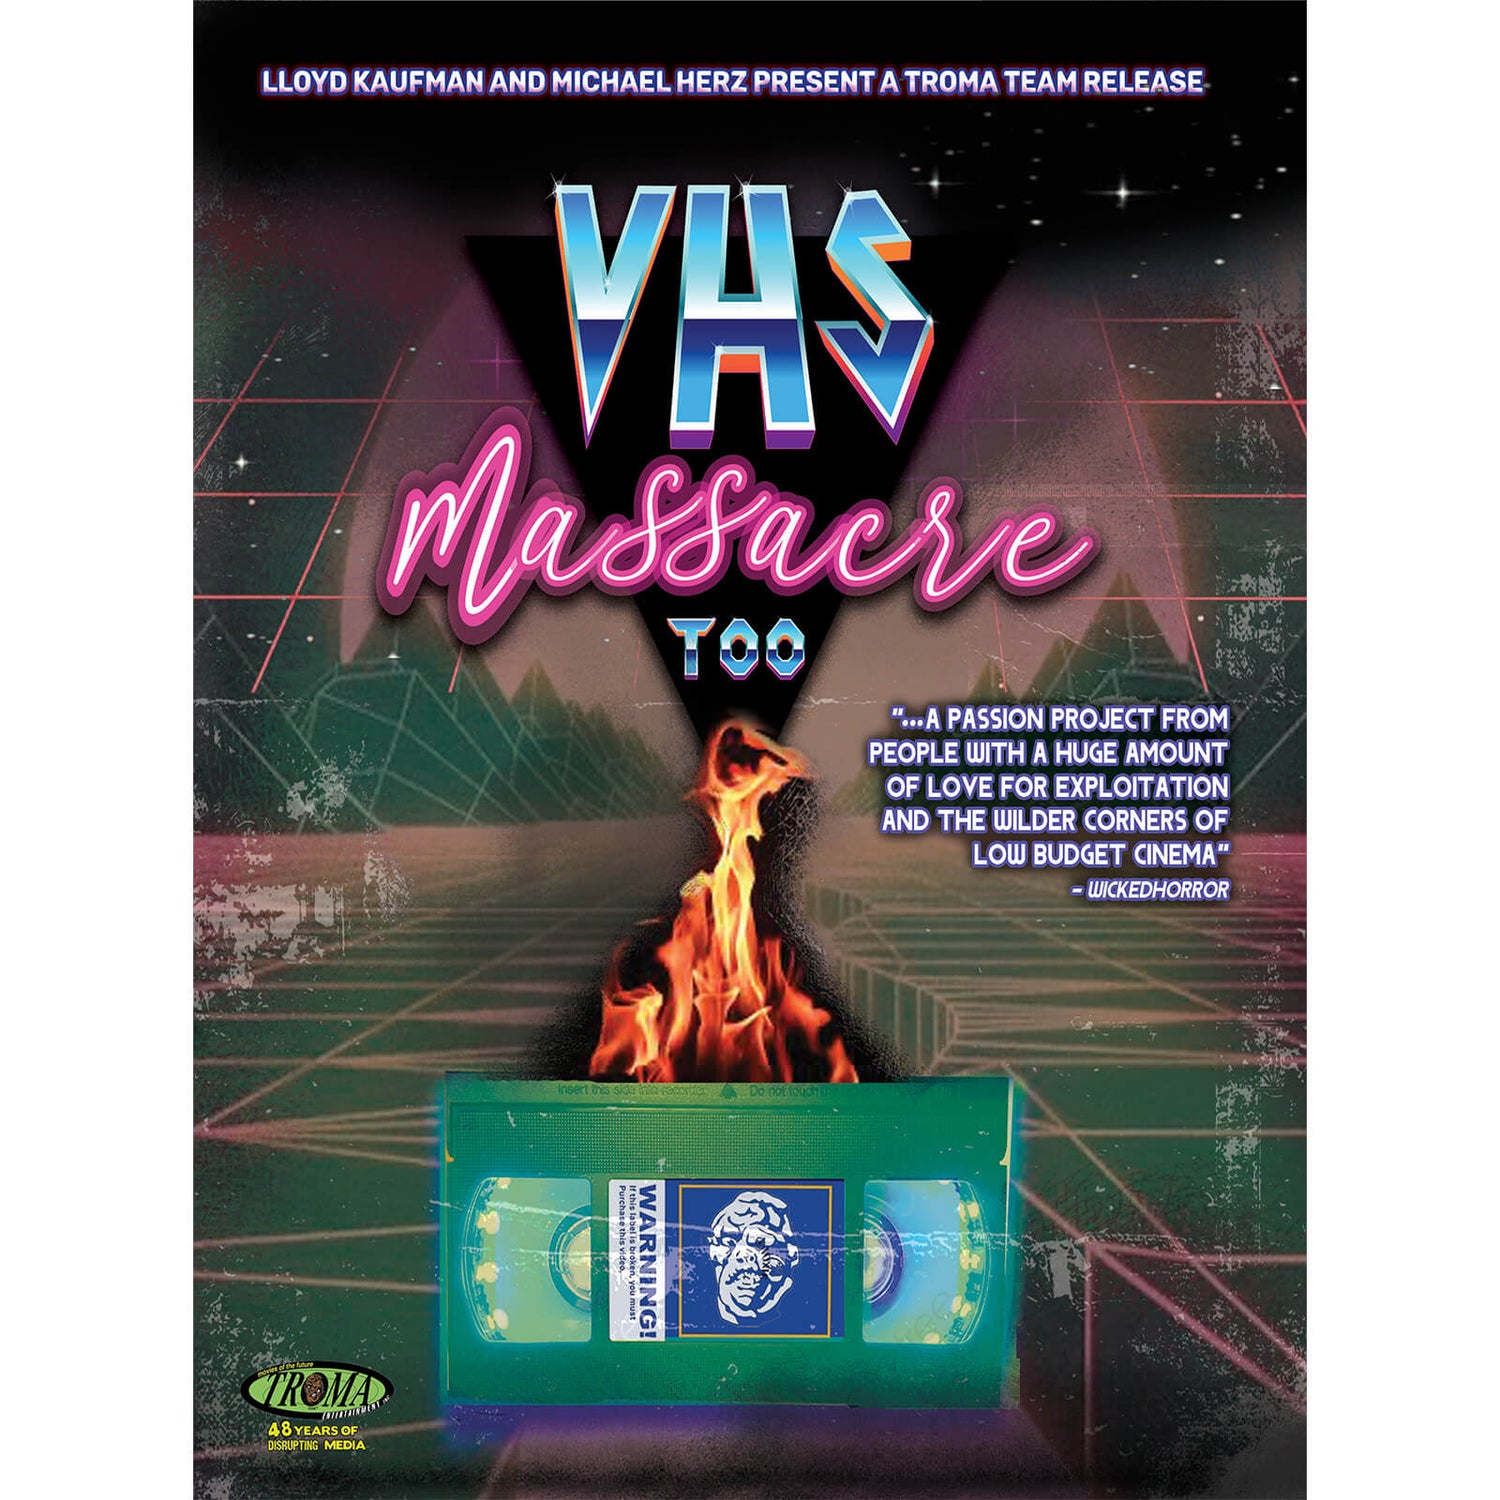 VHS Massacre Too (US Import)